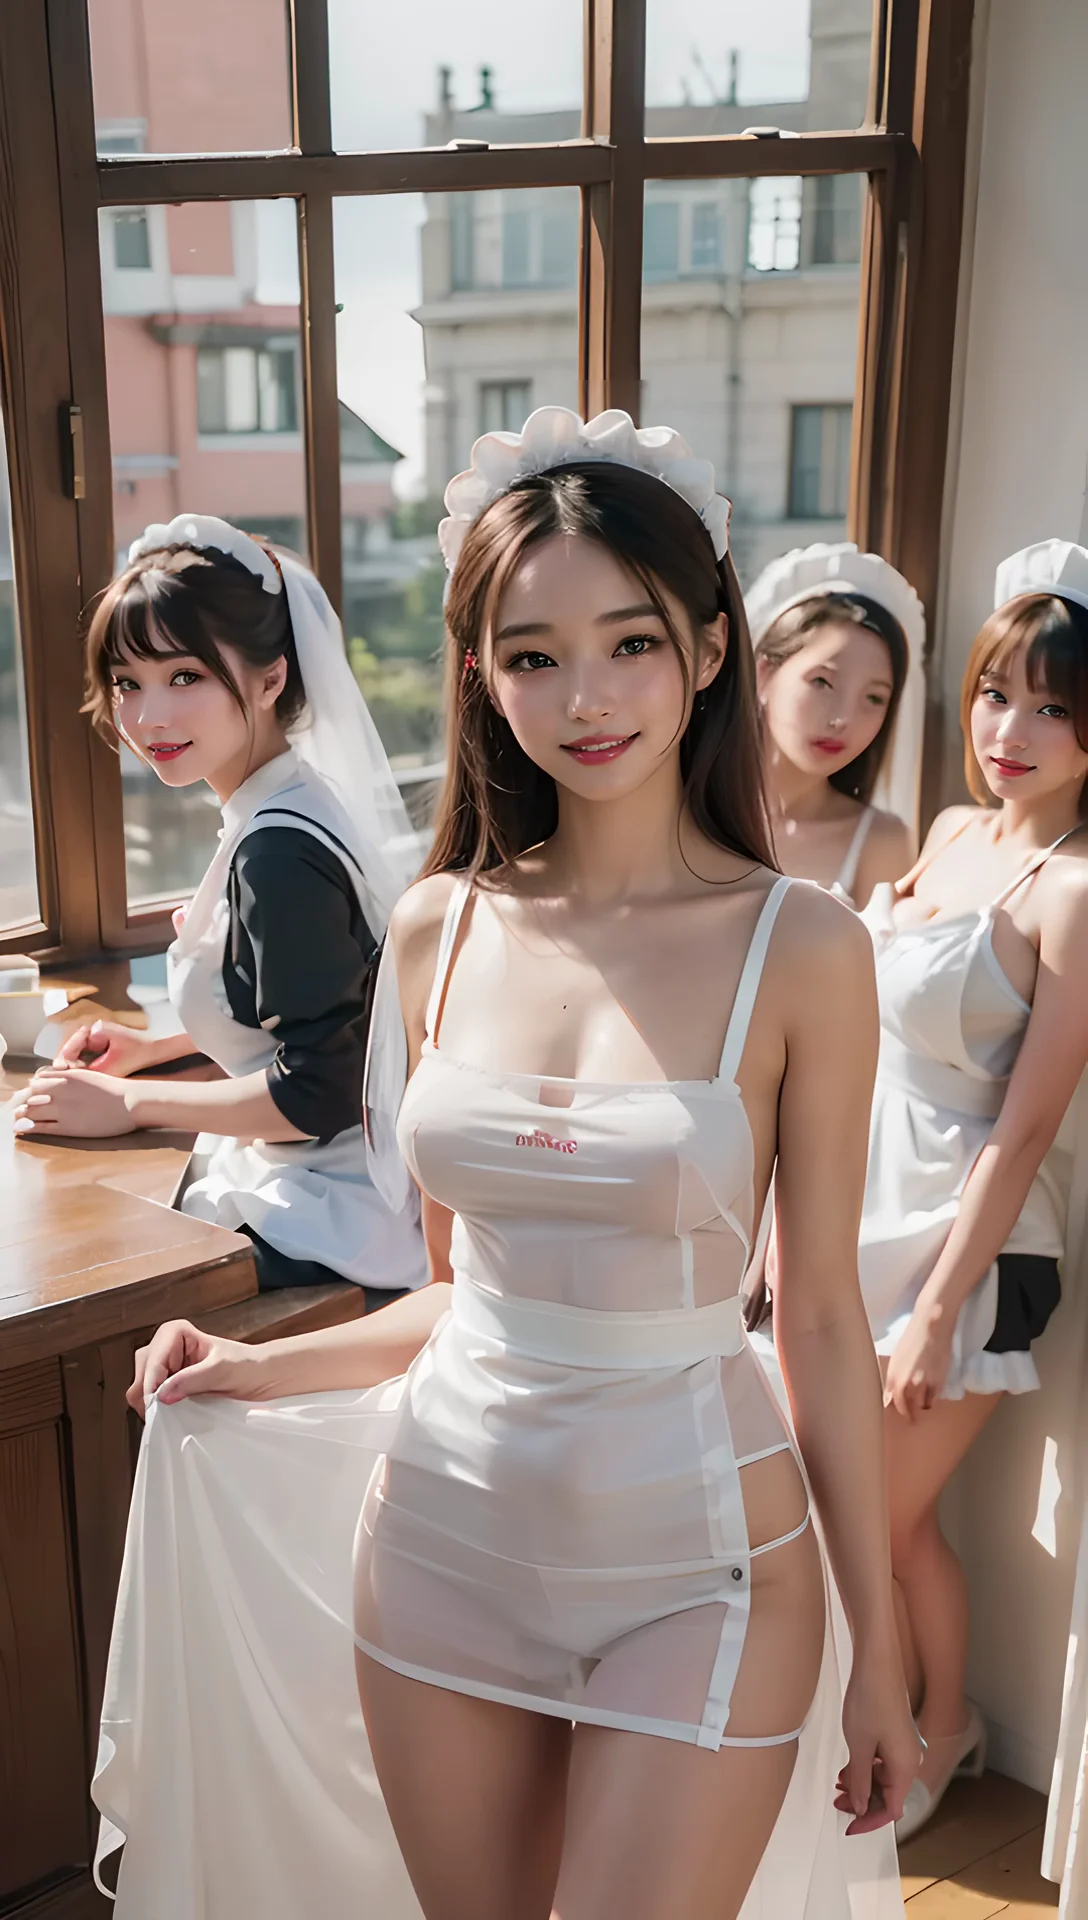 Ai LookBook: Maid Cafe Japan Images 14